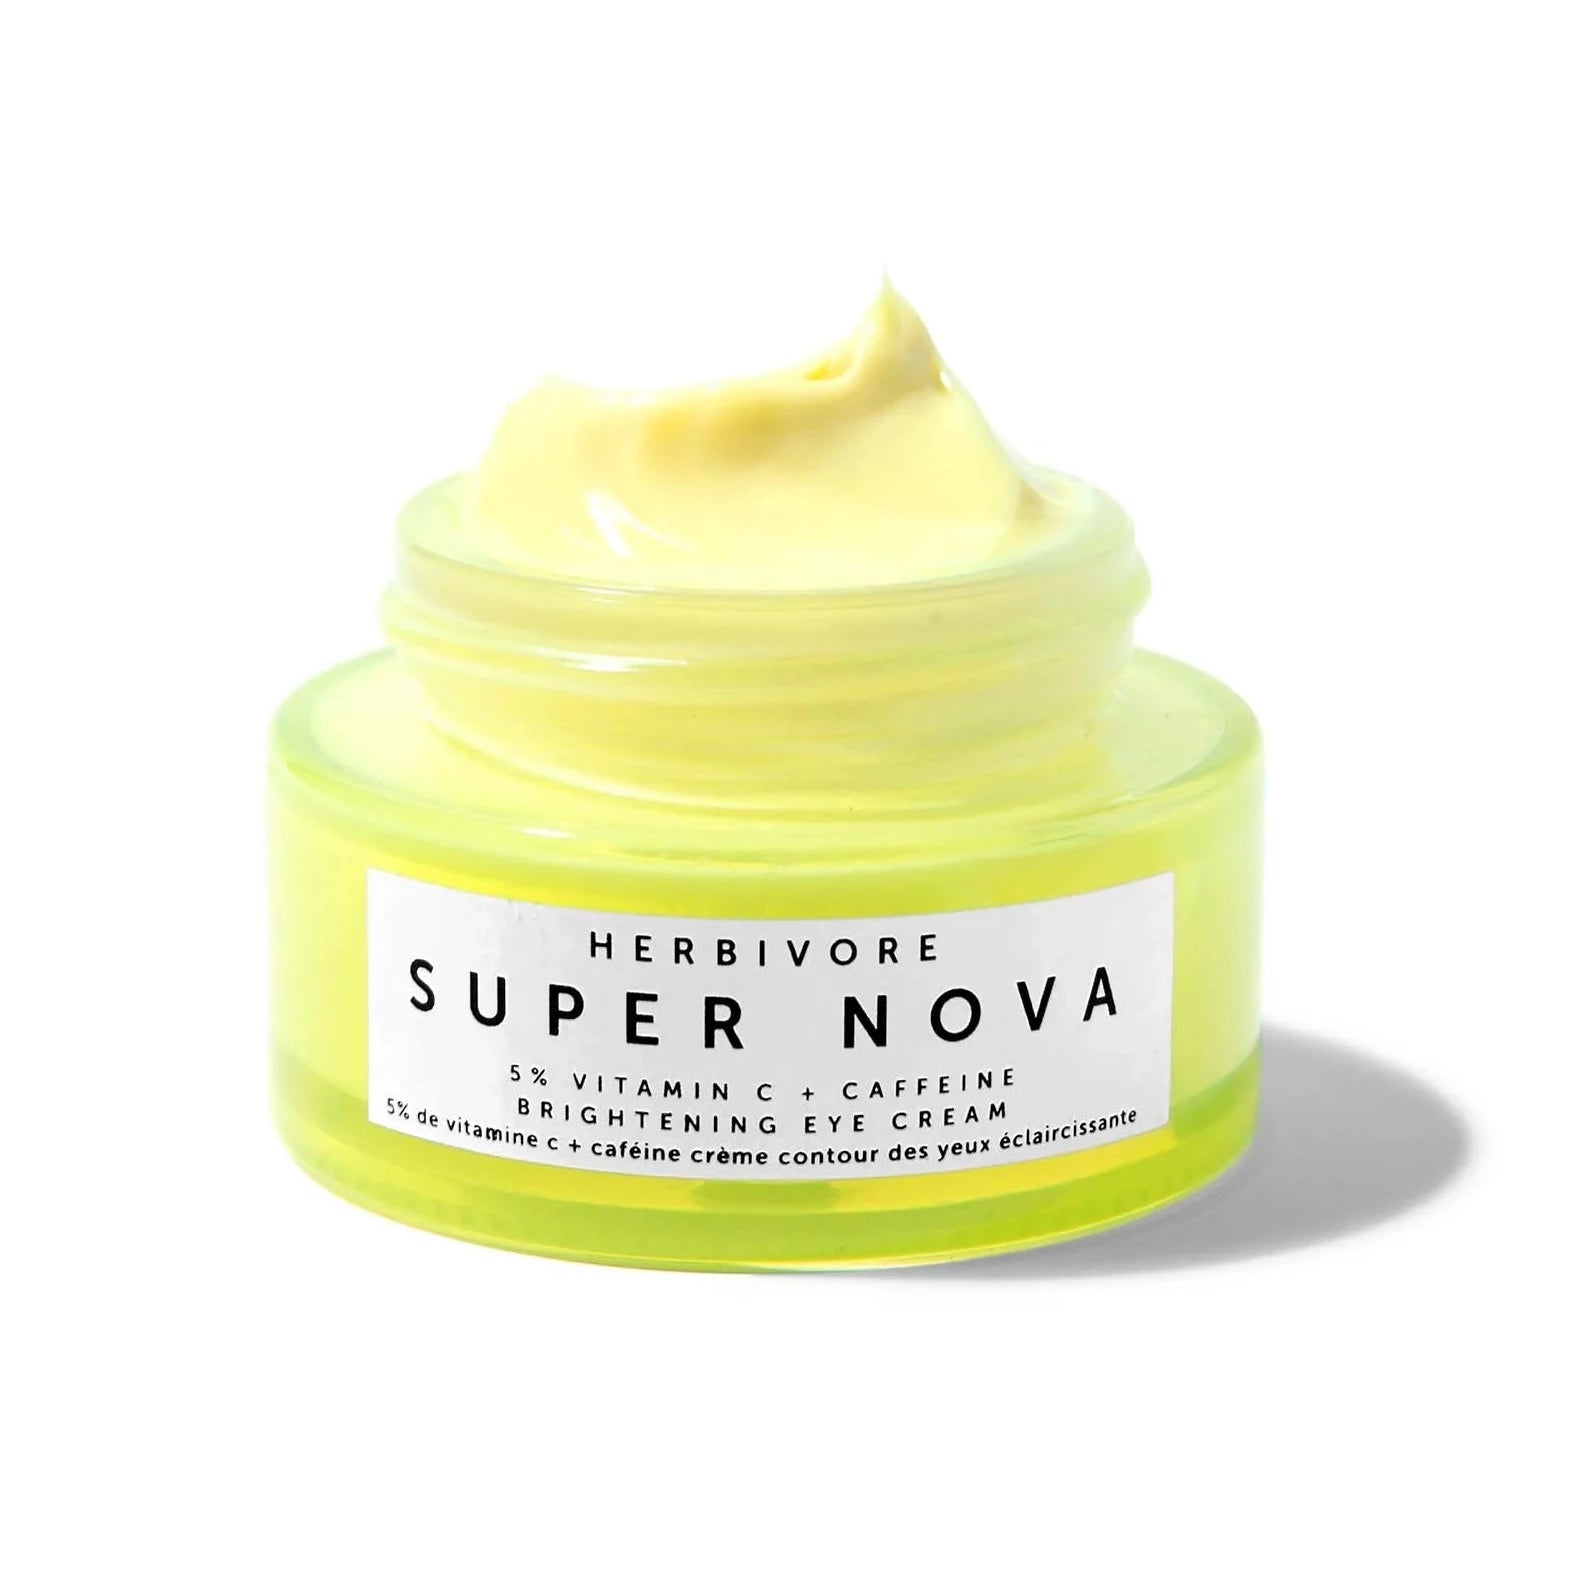 Super Nova Brightening Eye Cream without lid on white background.